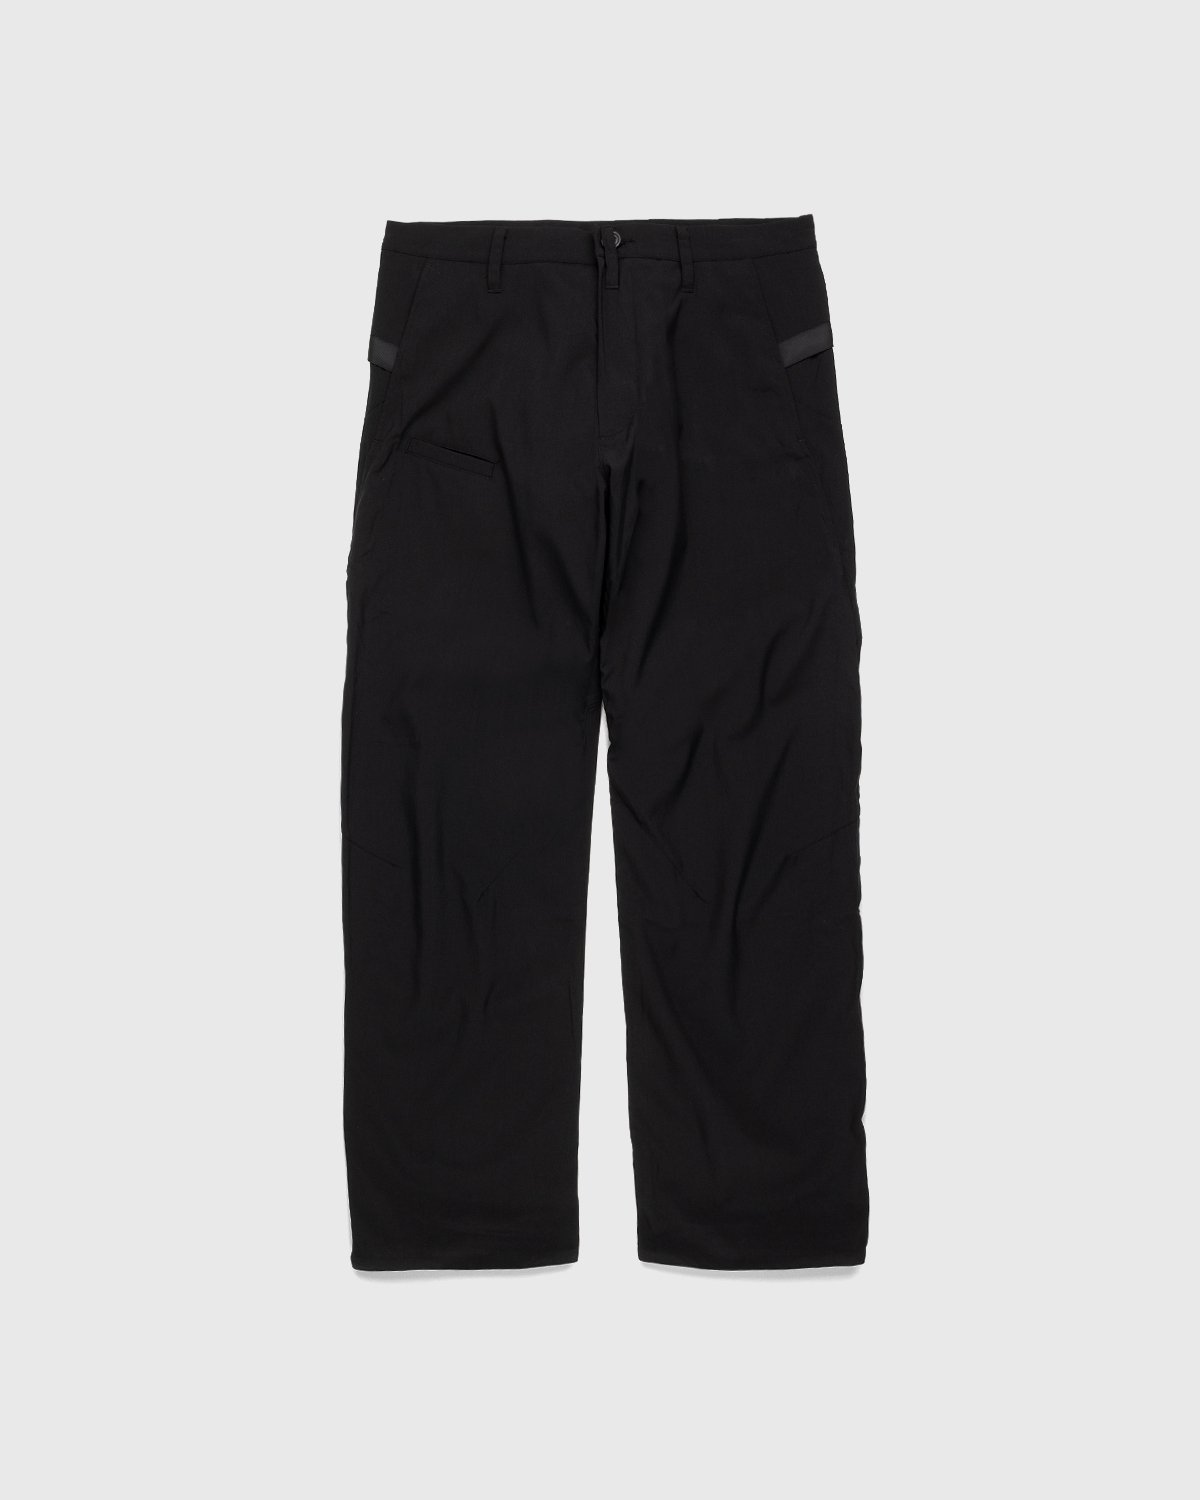 ACRONYM - P39-M Pants Black - Clothing - Black - Image 1